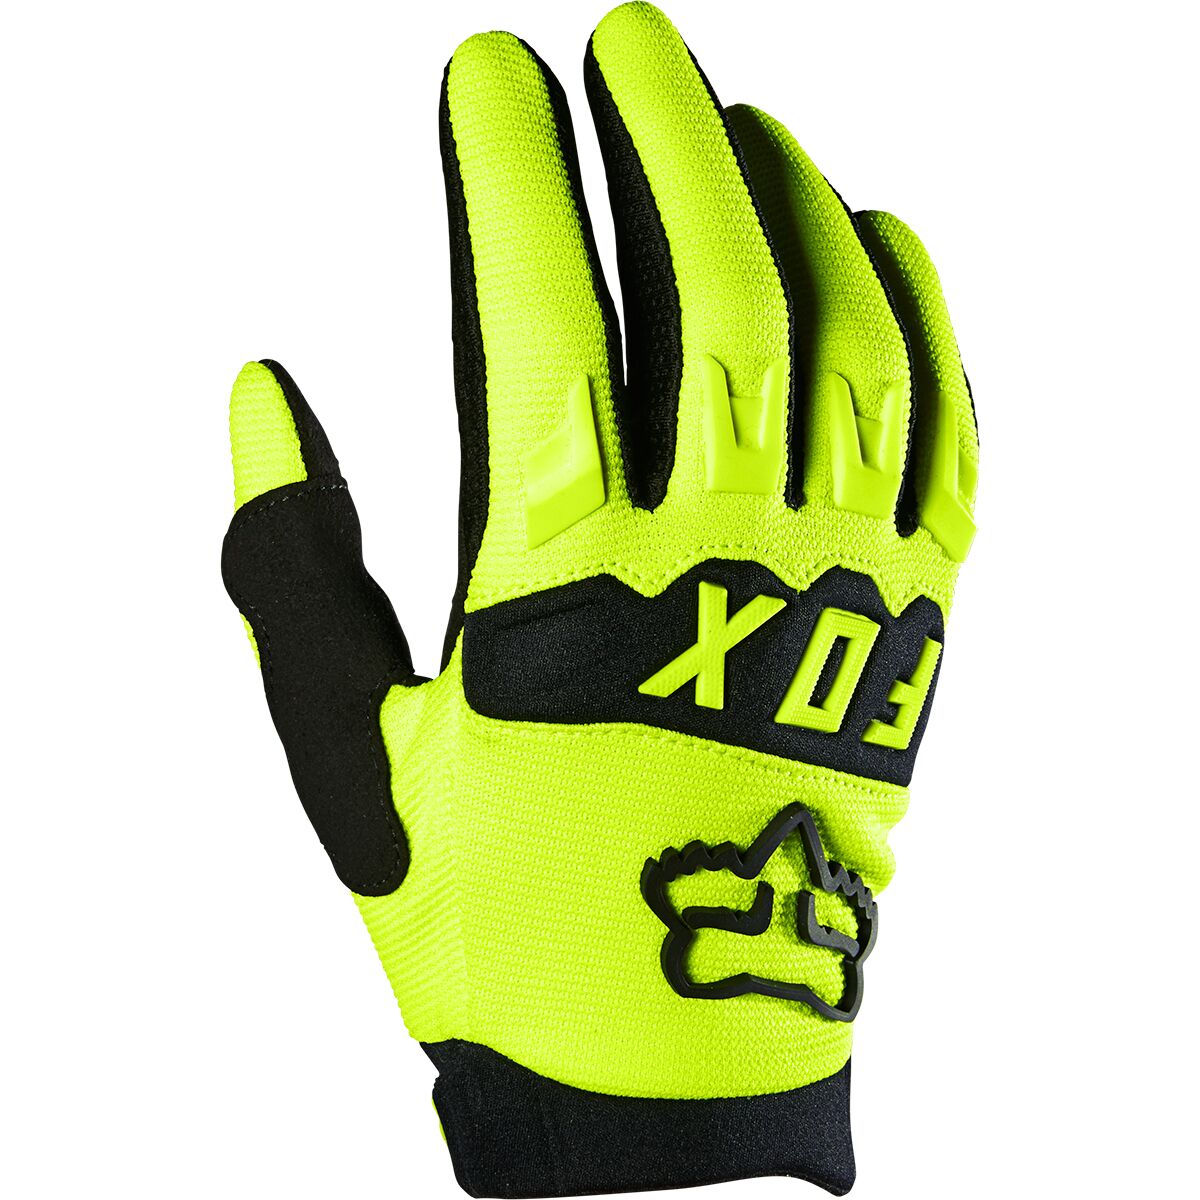 Fox Racing Dirtpaw Youth Glove - Kids' Fluorescent Yellow, L